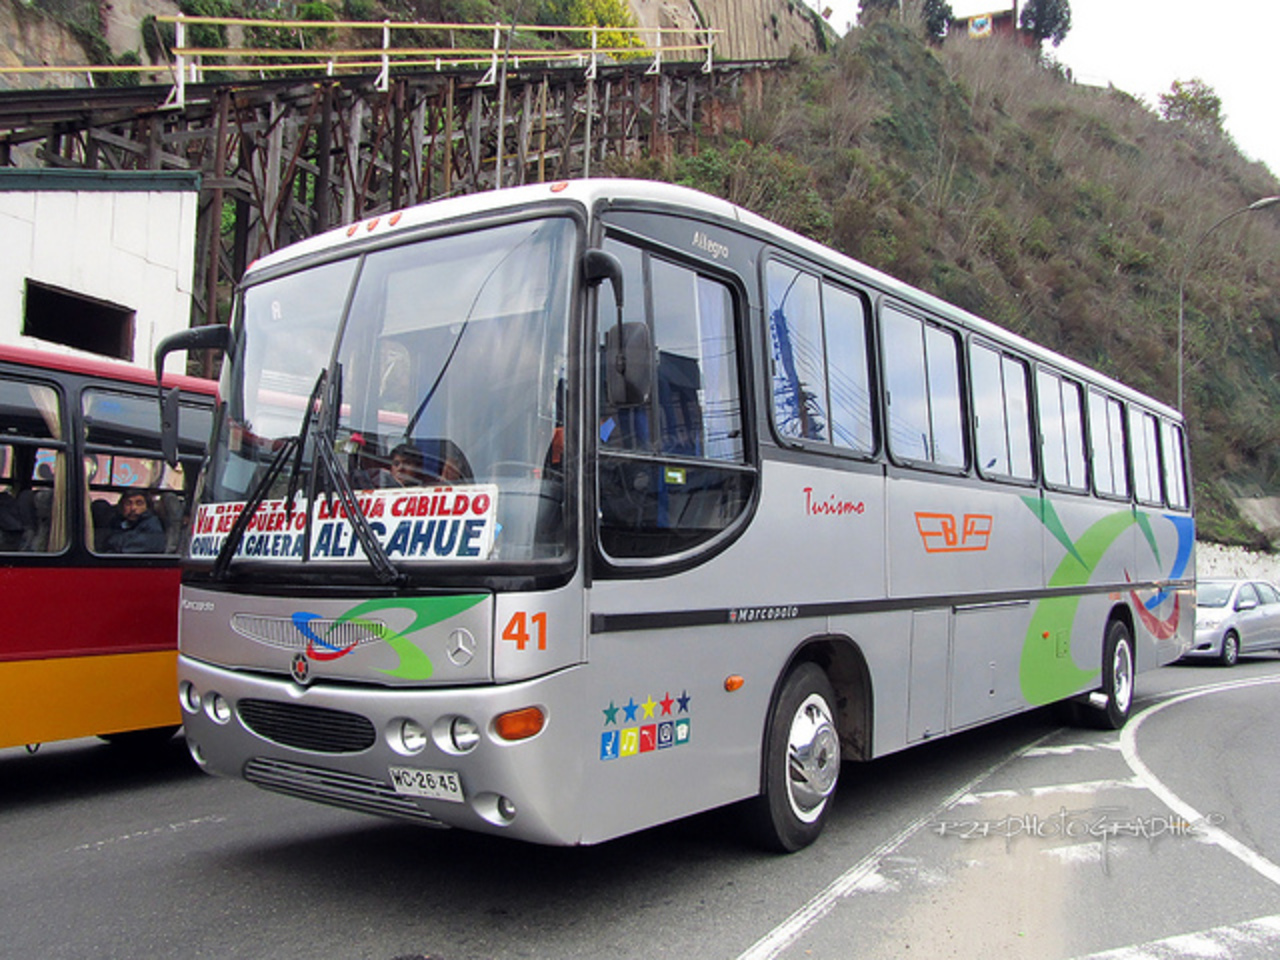 Buses La PorteÃ±a. | Flickr - Photo Sharing!